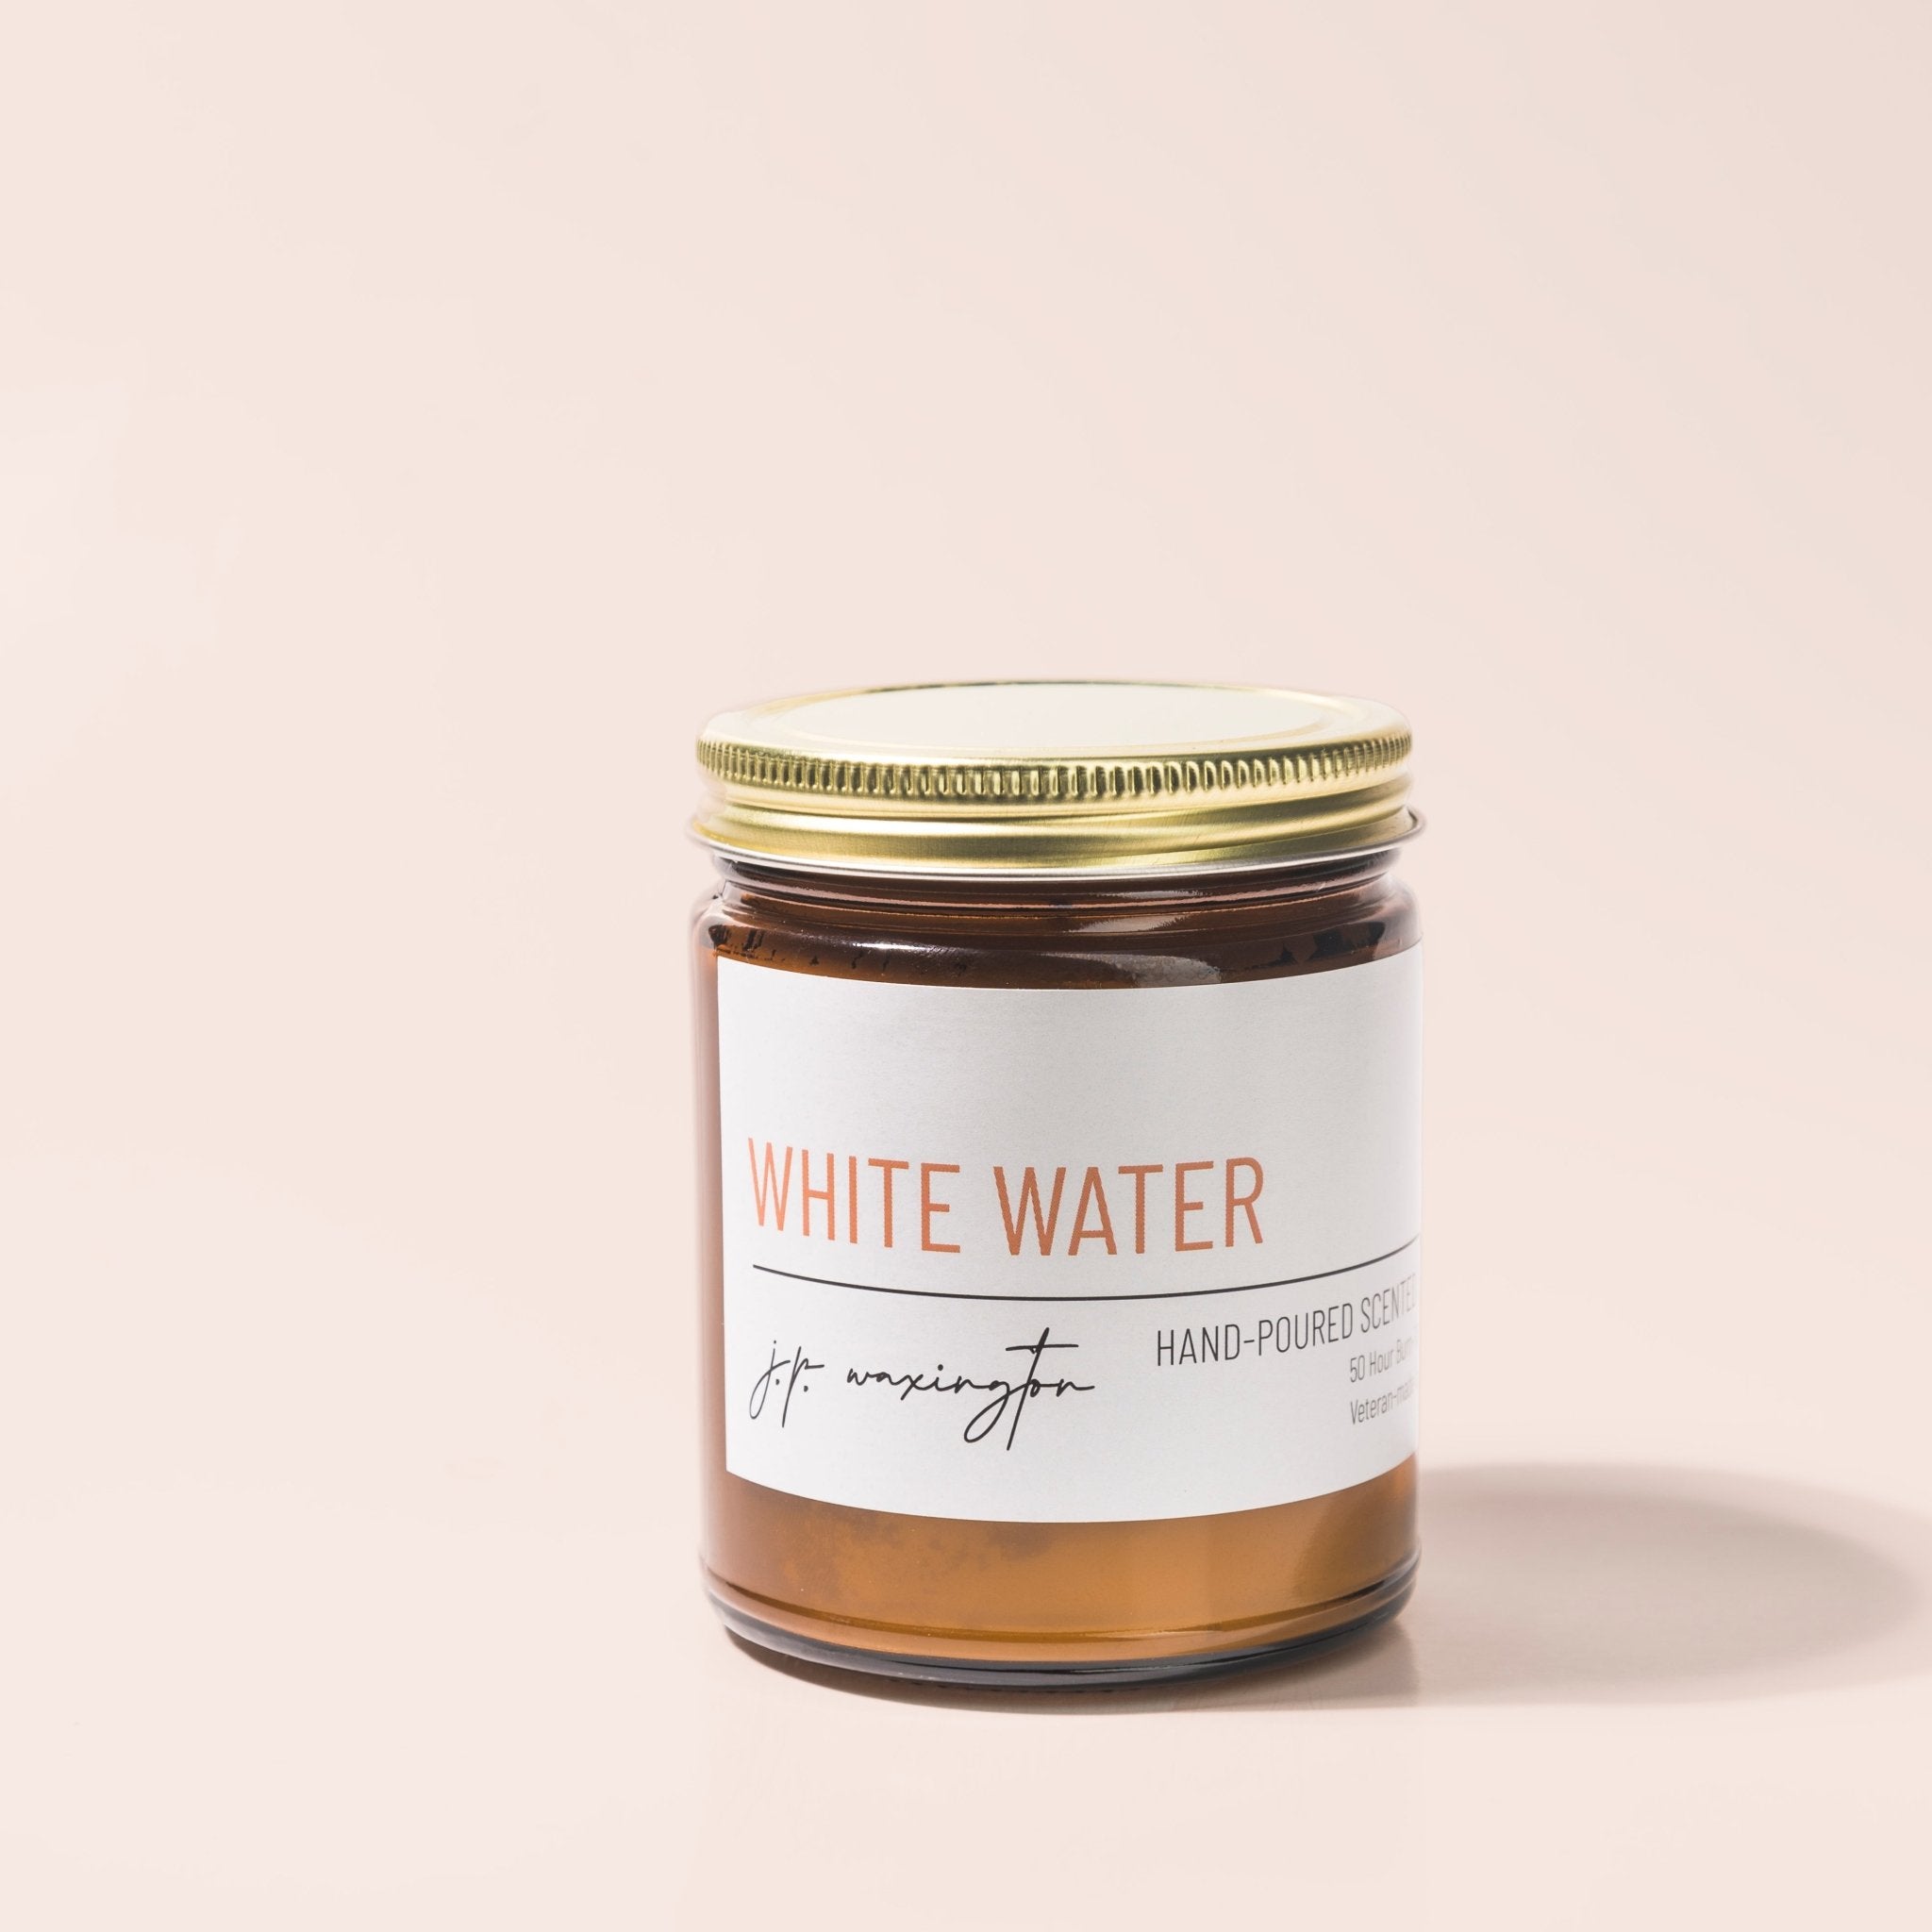 Whitewater - J.P. Waxington Candle Company